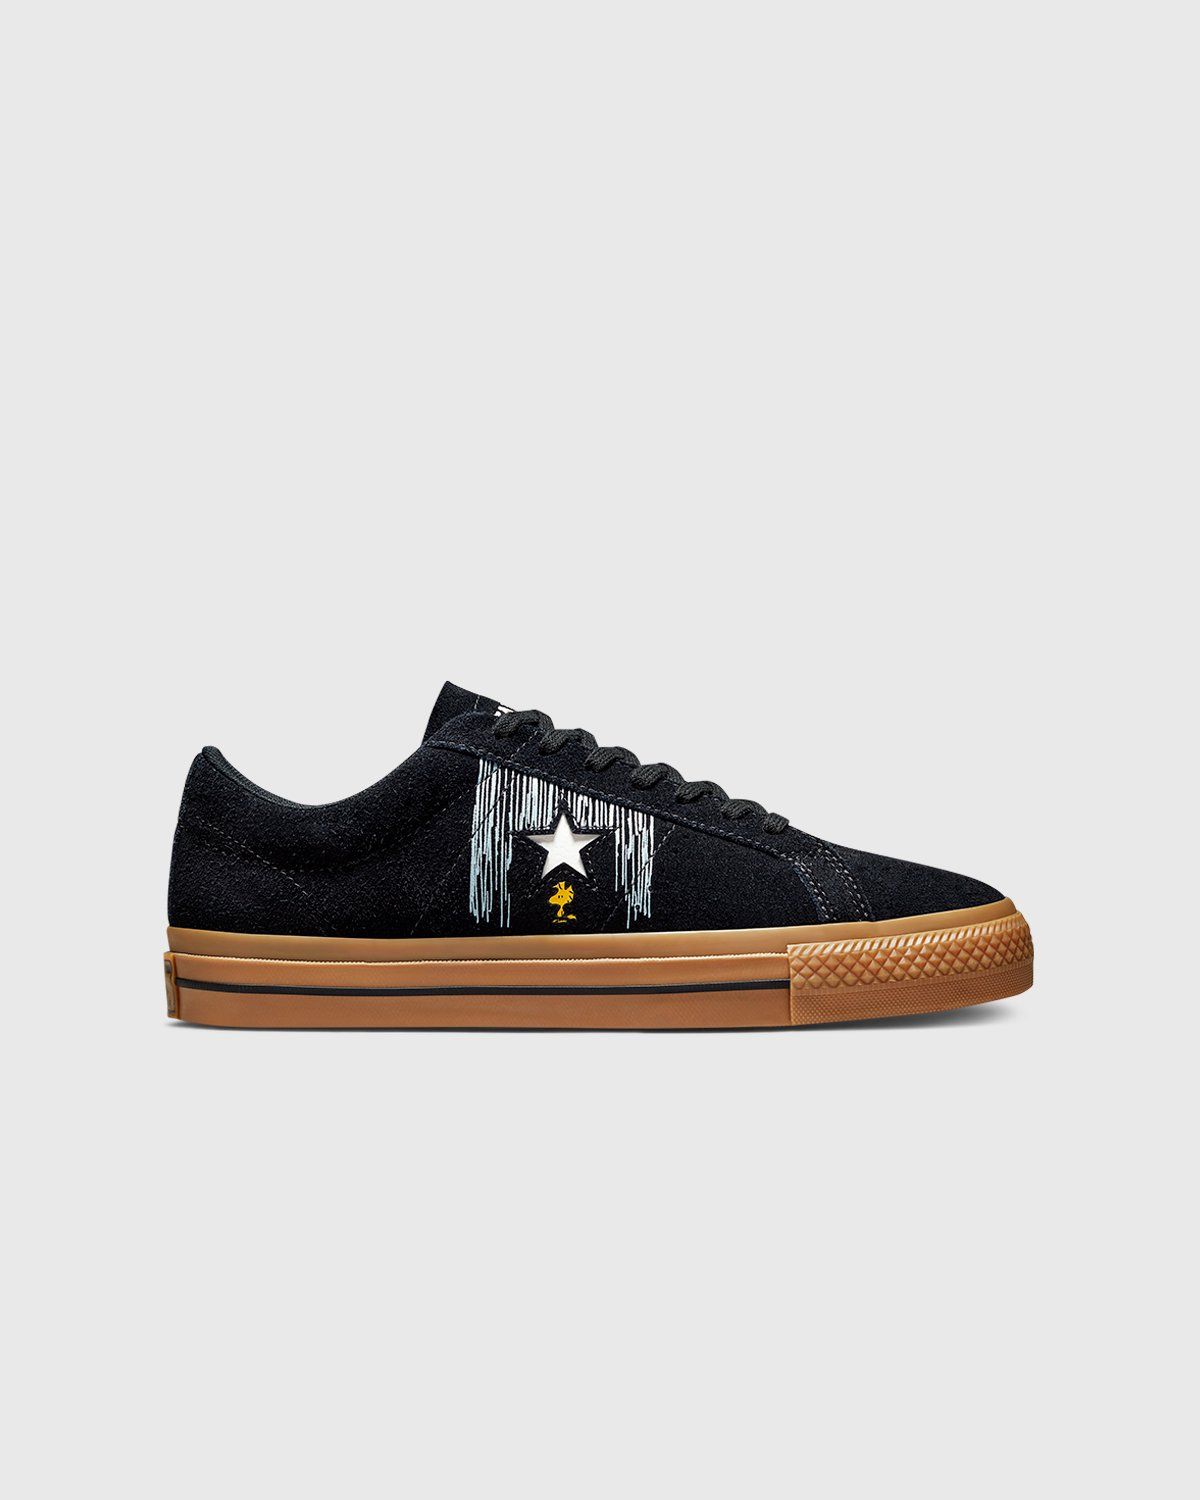 Converse x Peanuts – One Star Ox Black/Egret/Gum Honey - Low Top Sneakers - Black - Image 1